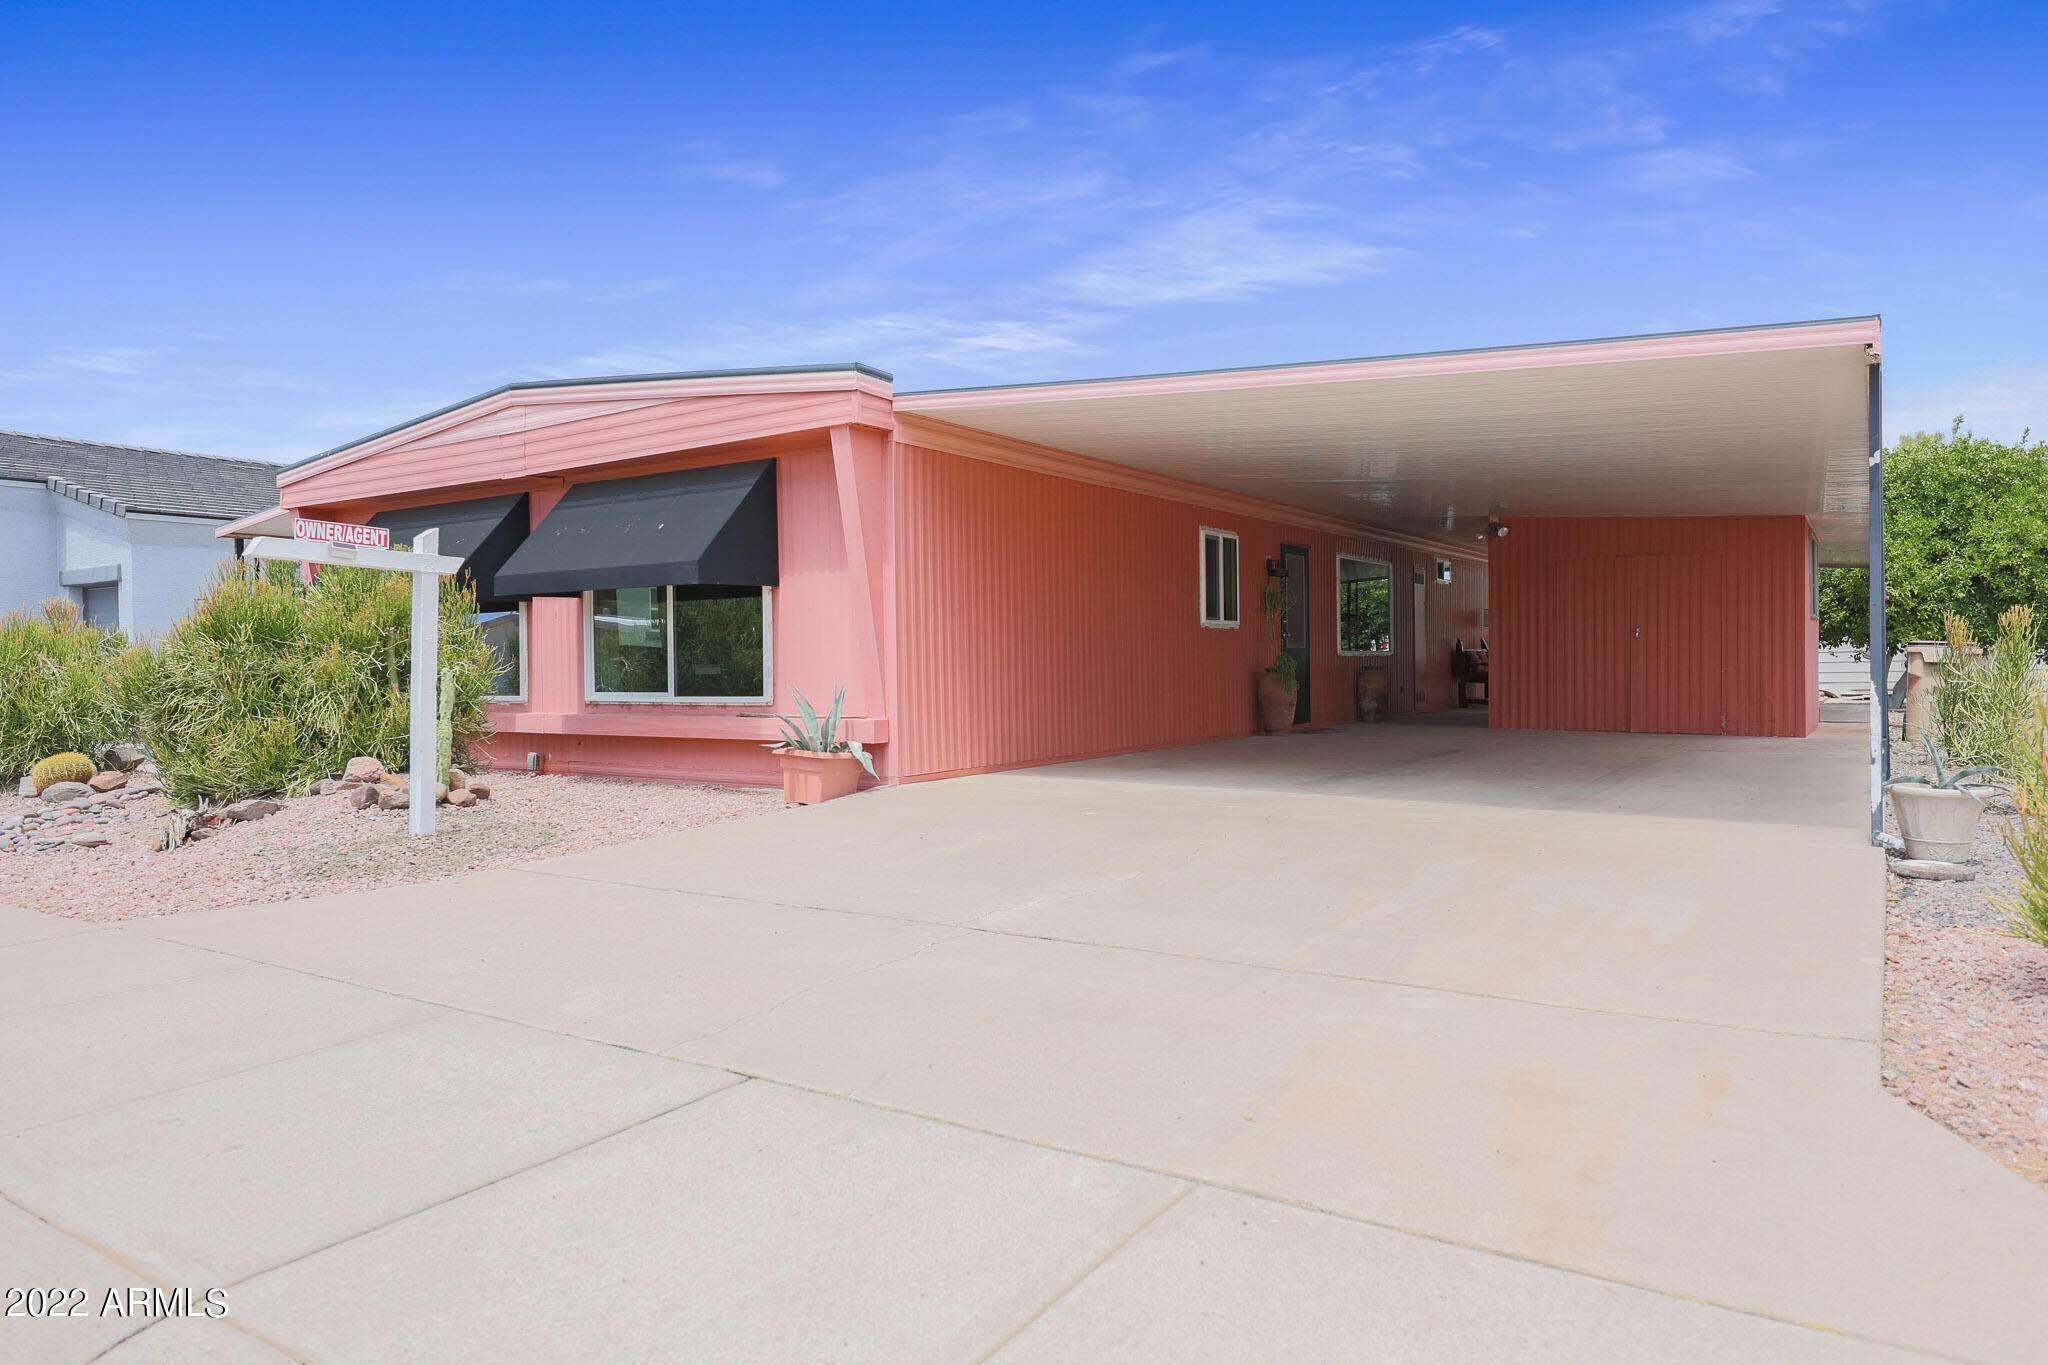 6. Mobile Home for Sale at Mesa, AZ 85215